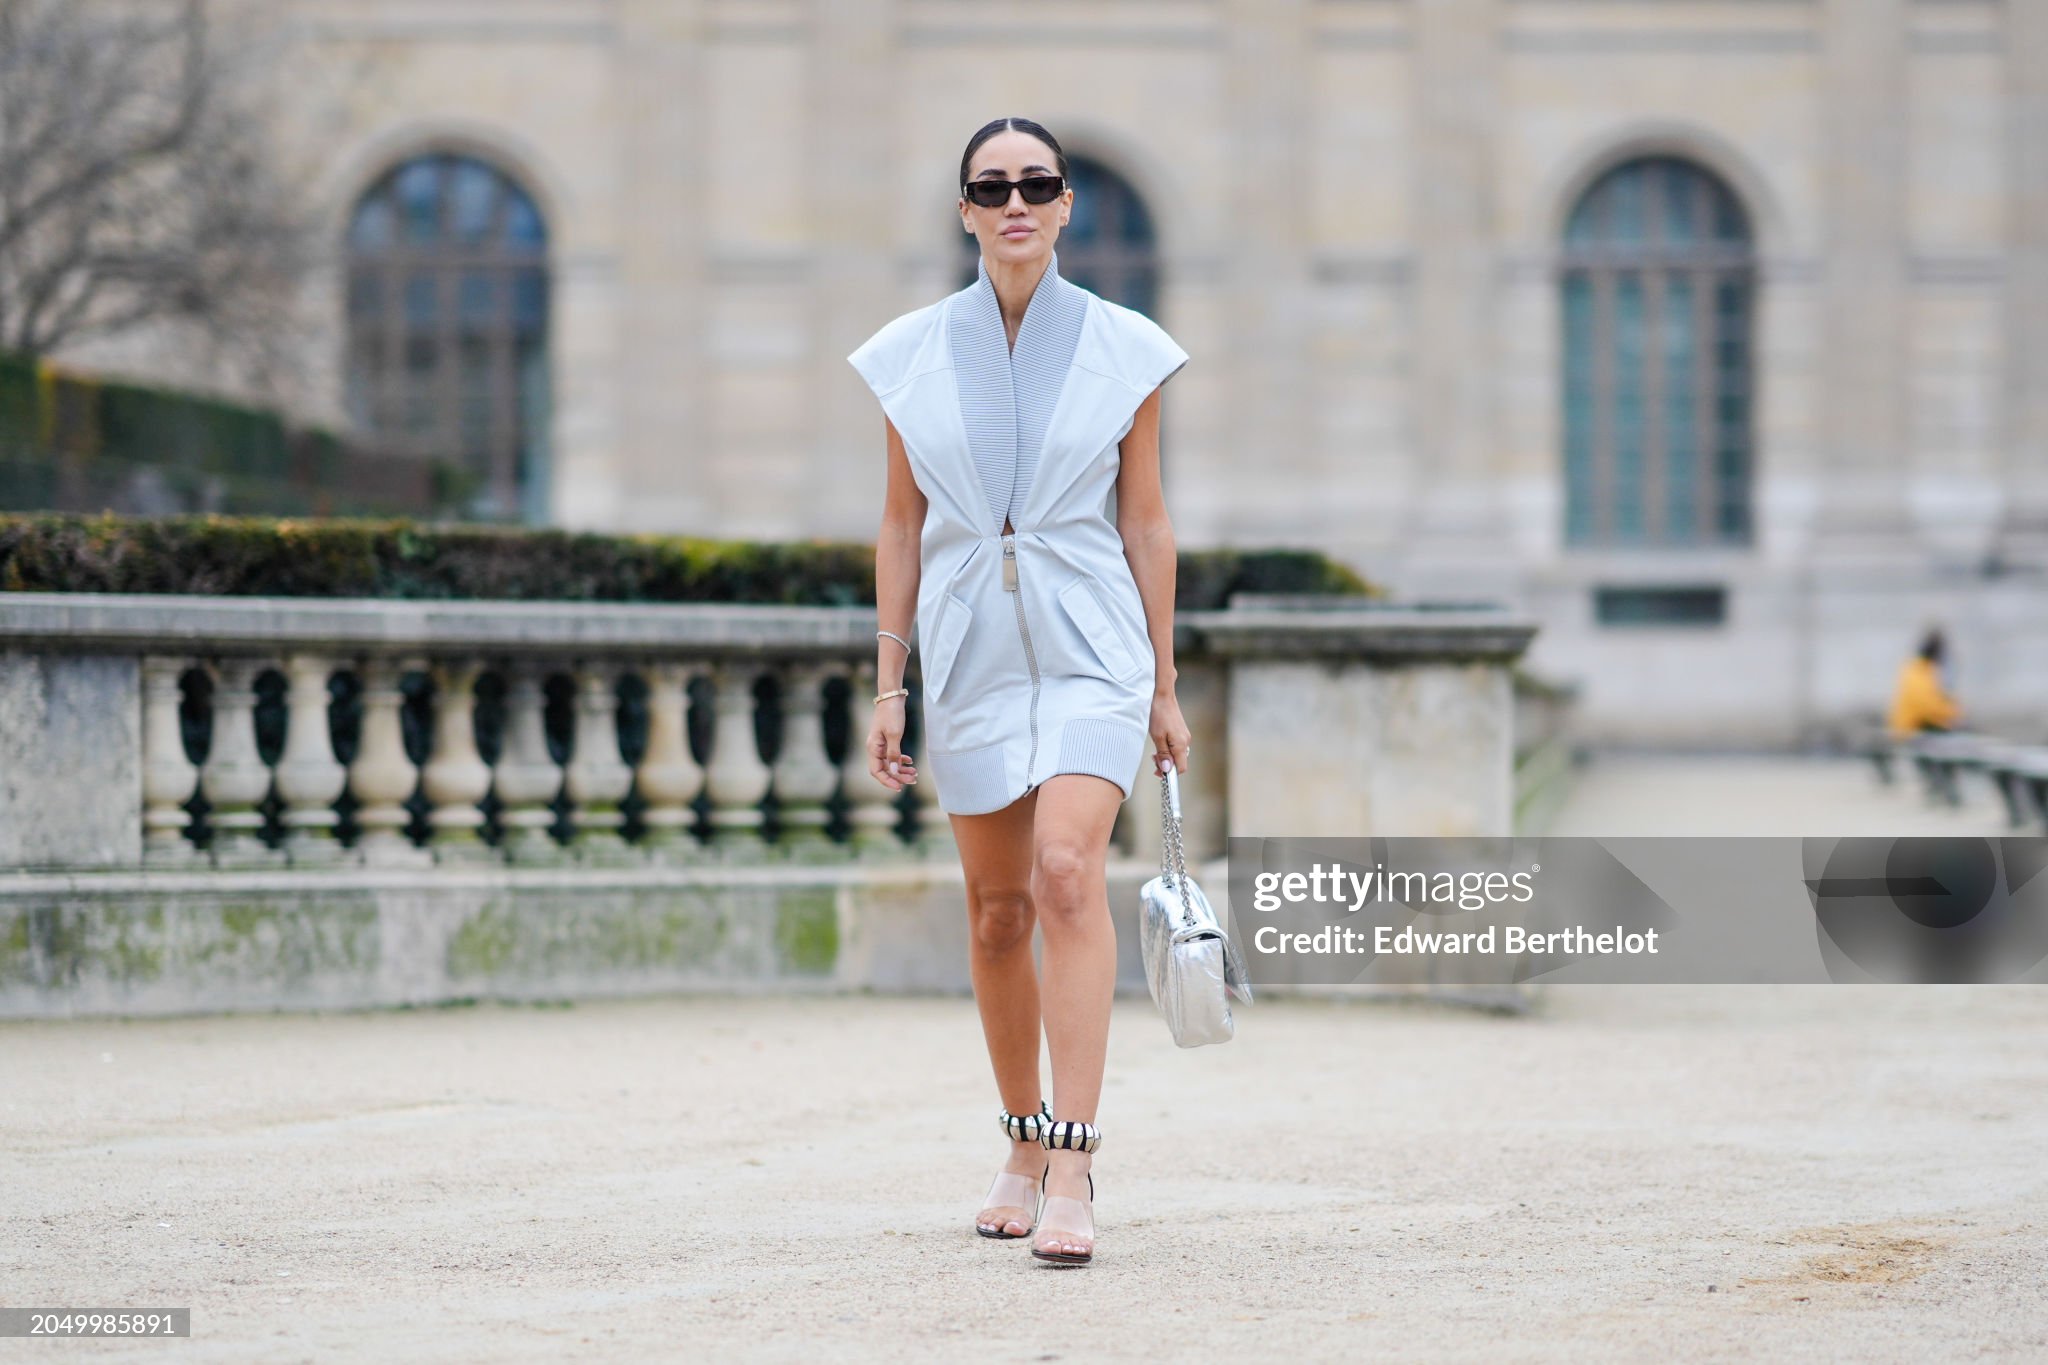 paris-france-tamara-kalinic-wears-sunglasses-a-pastel-pale-blue-mini-gathered-dress-with.jpg